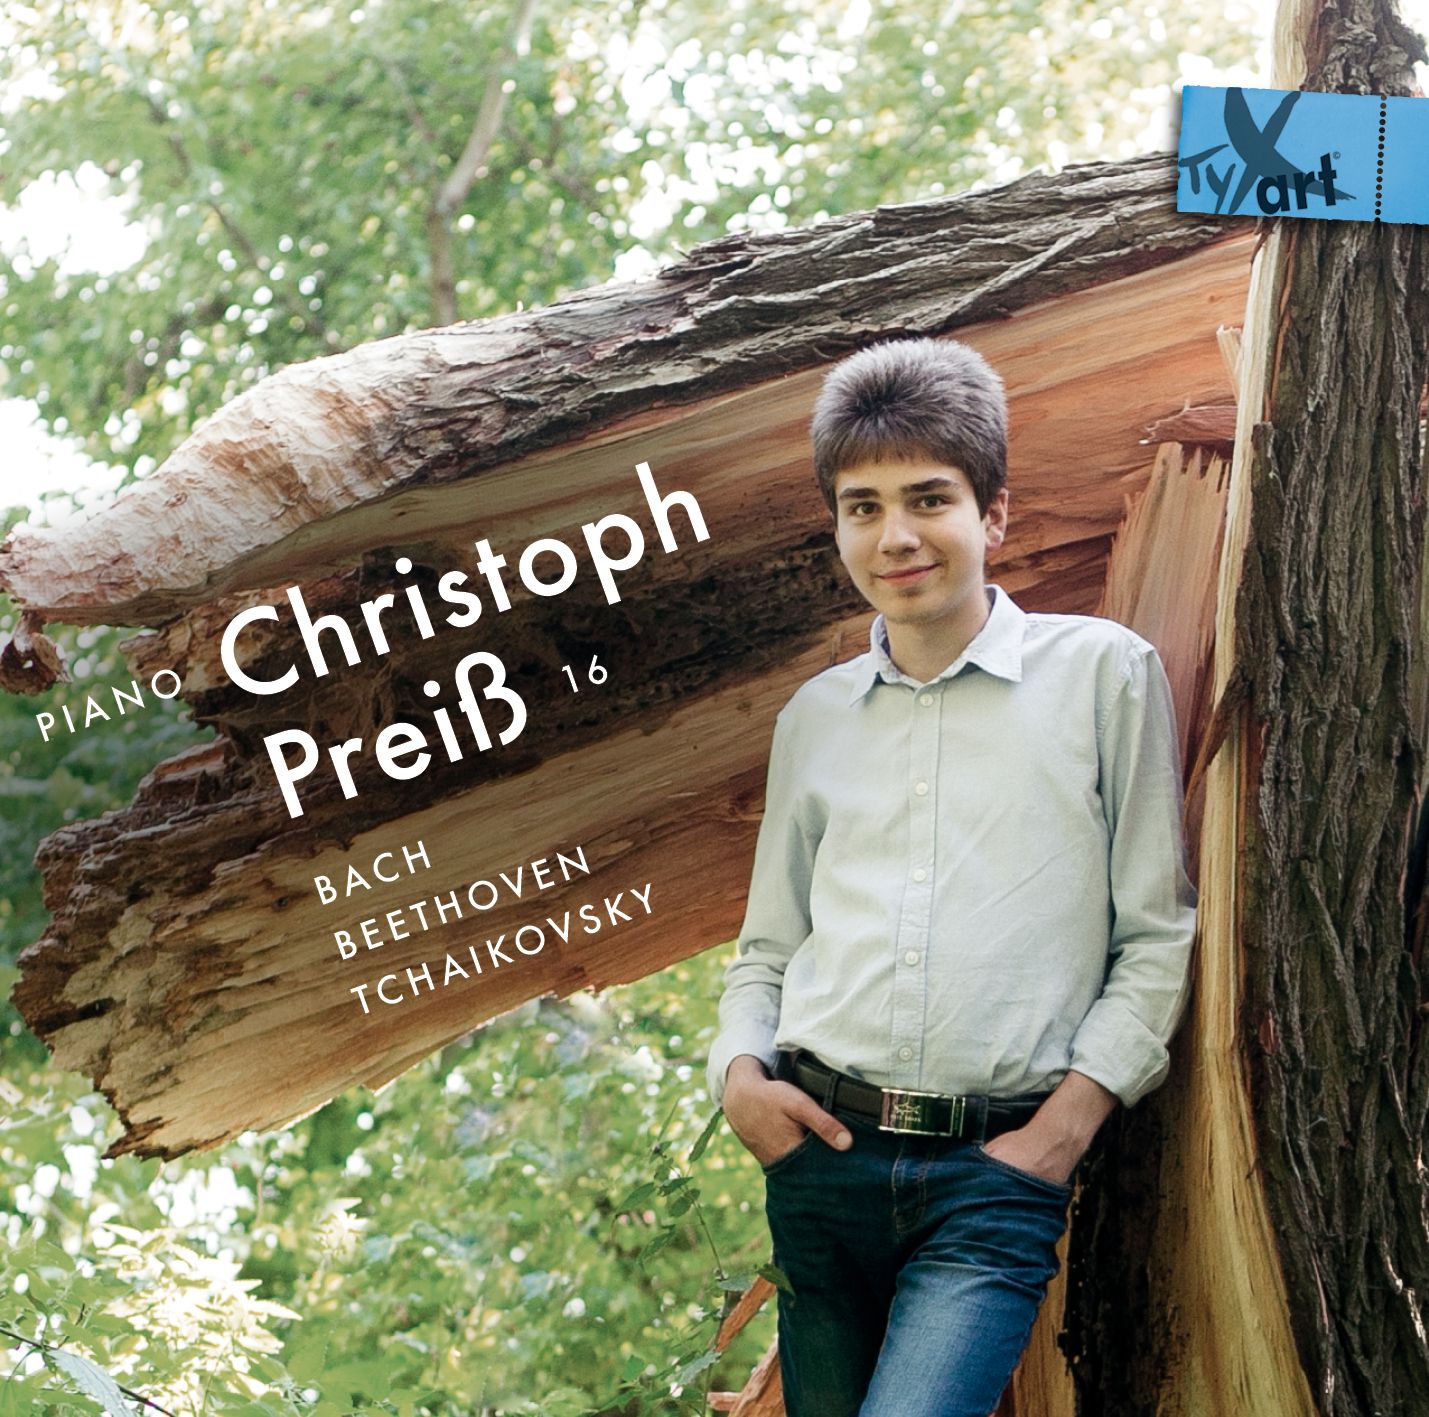 Christoph Preiss, 16, Piano